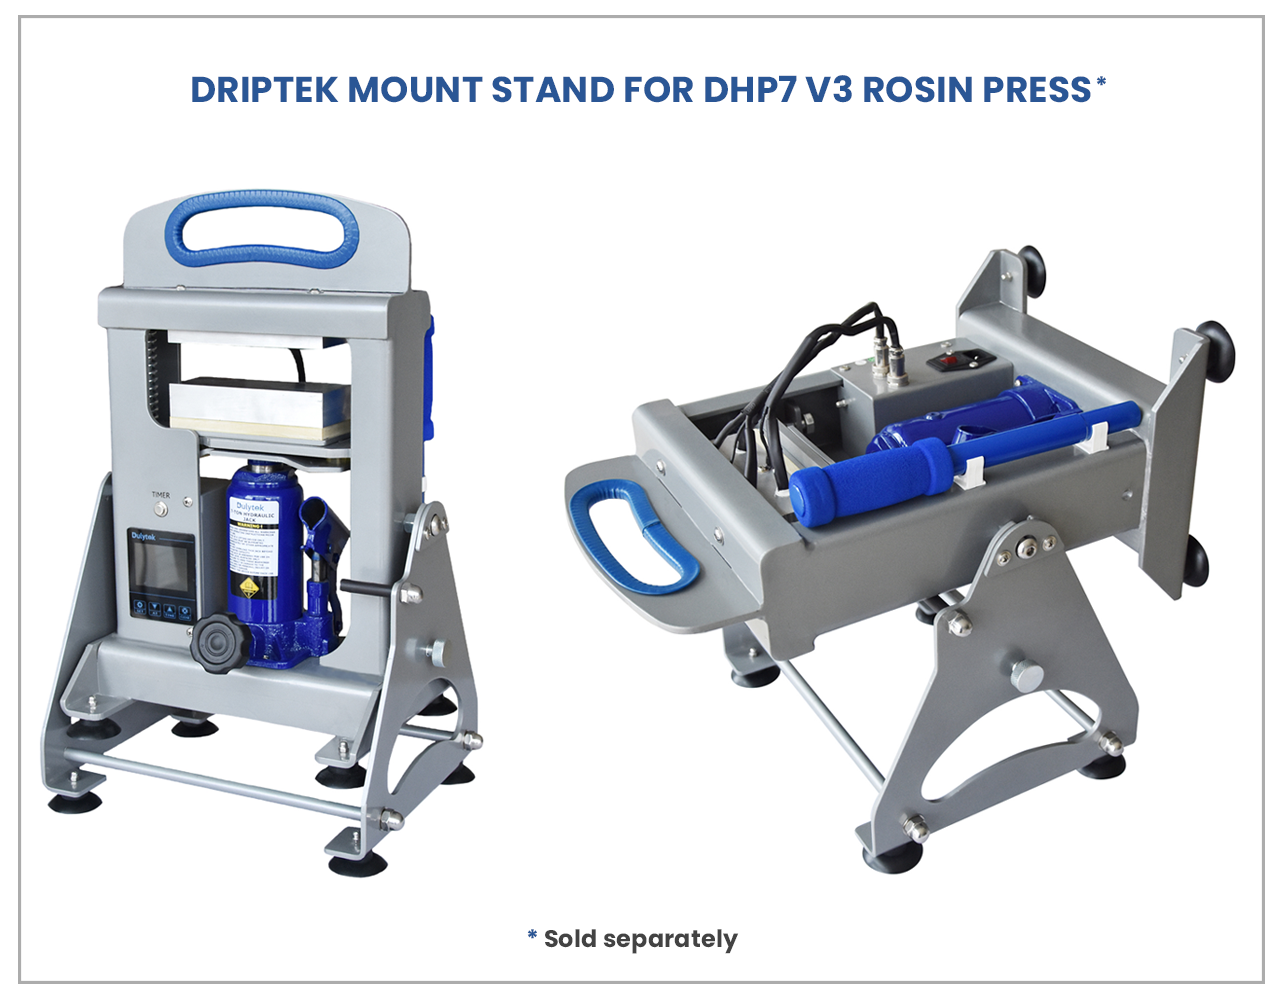 Dulytek DripTek Mount Stand for DHP7 Press